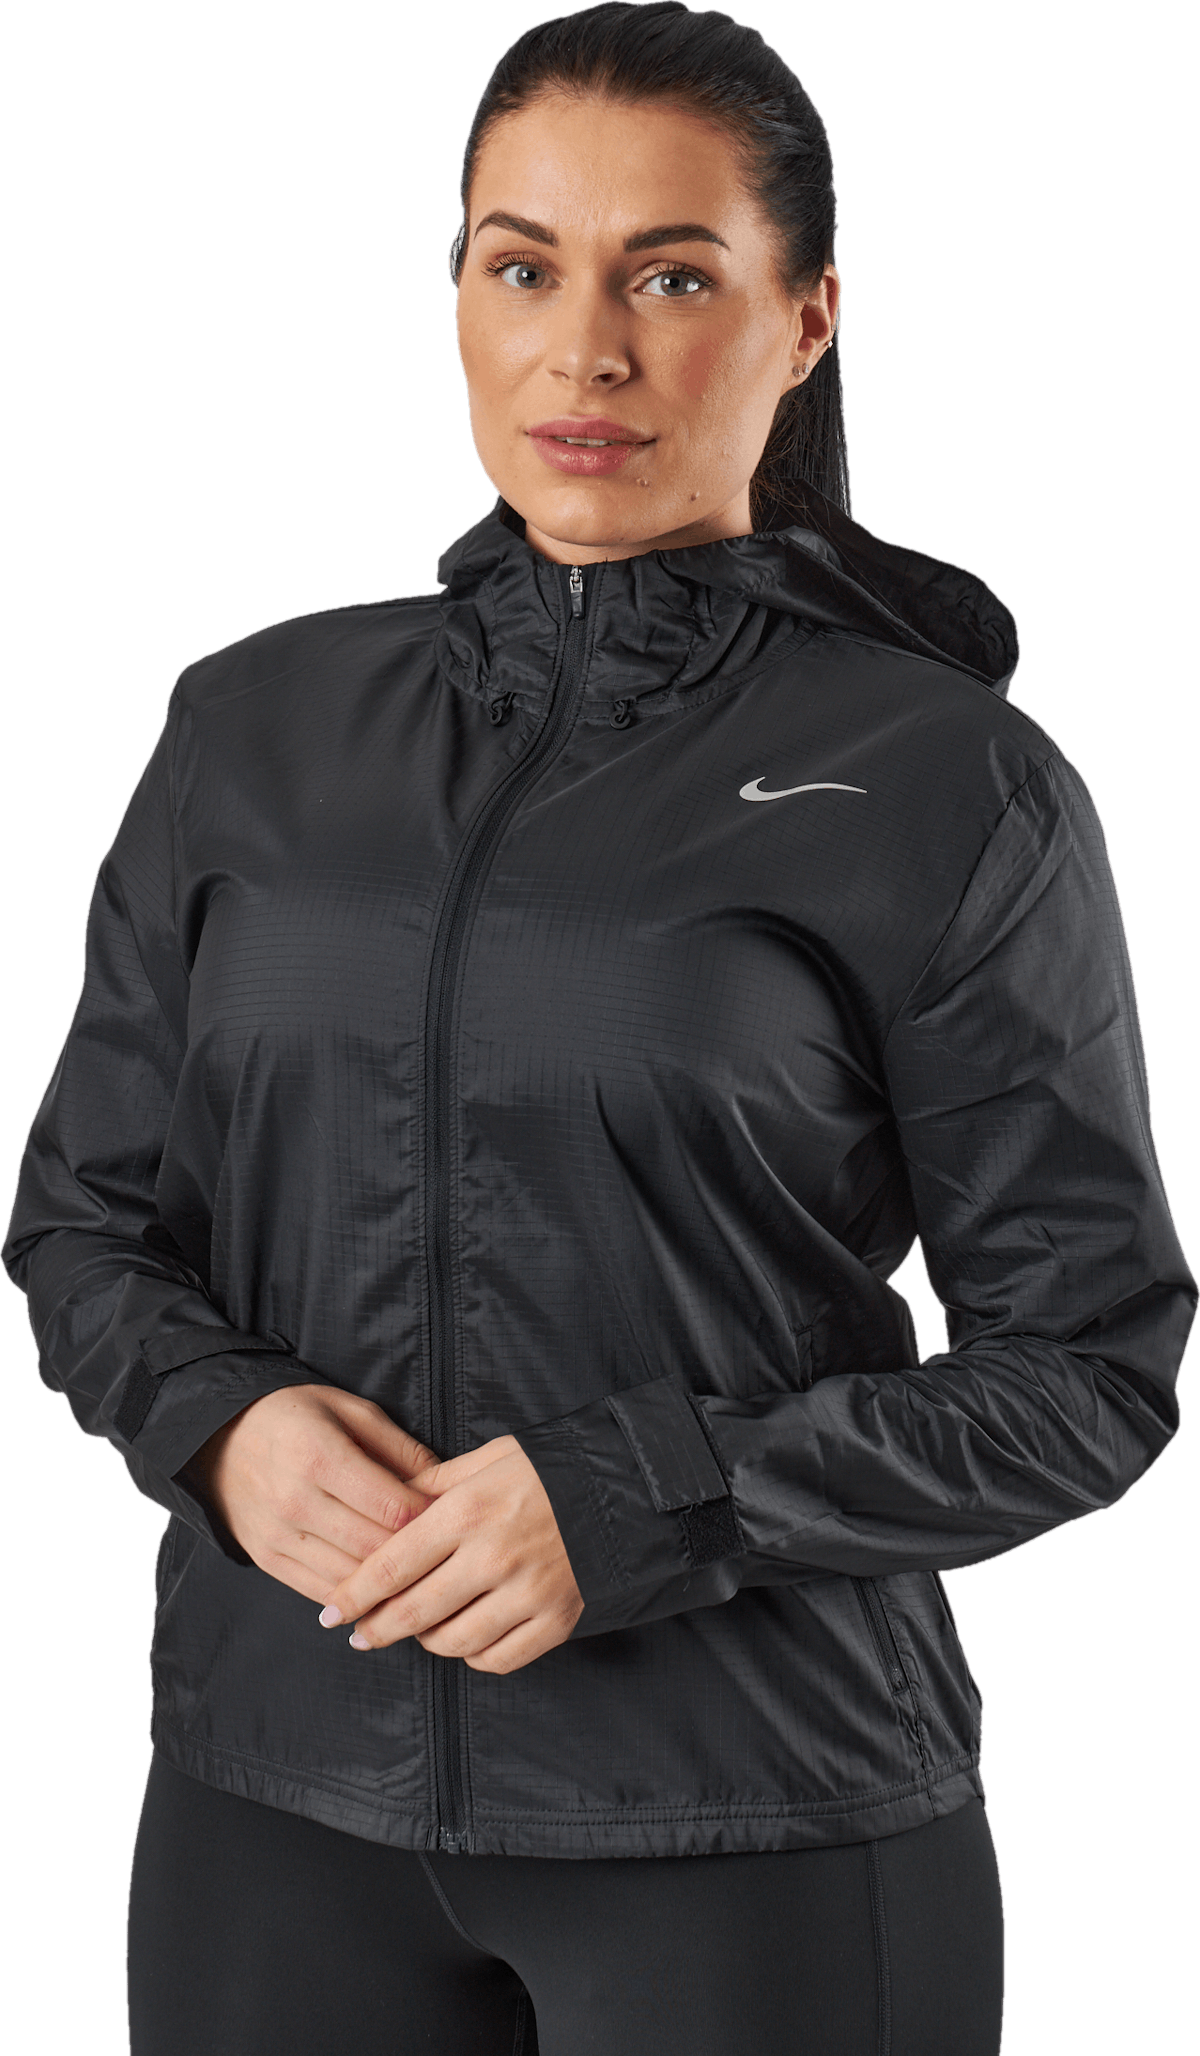 Essential Women's Running Jacket BLACK/REFLECTIVE SILV